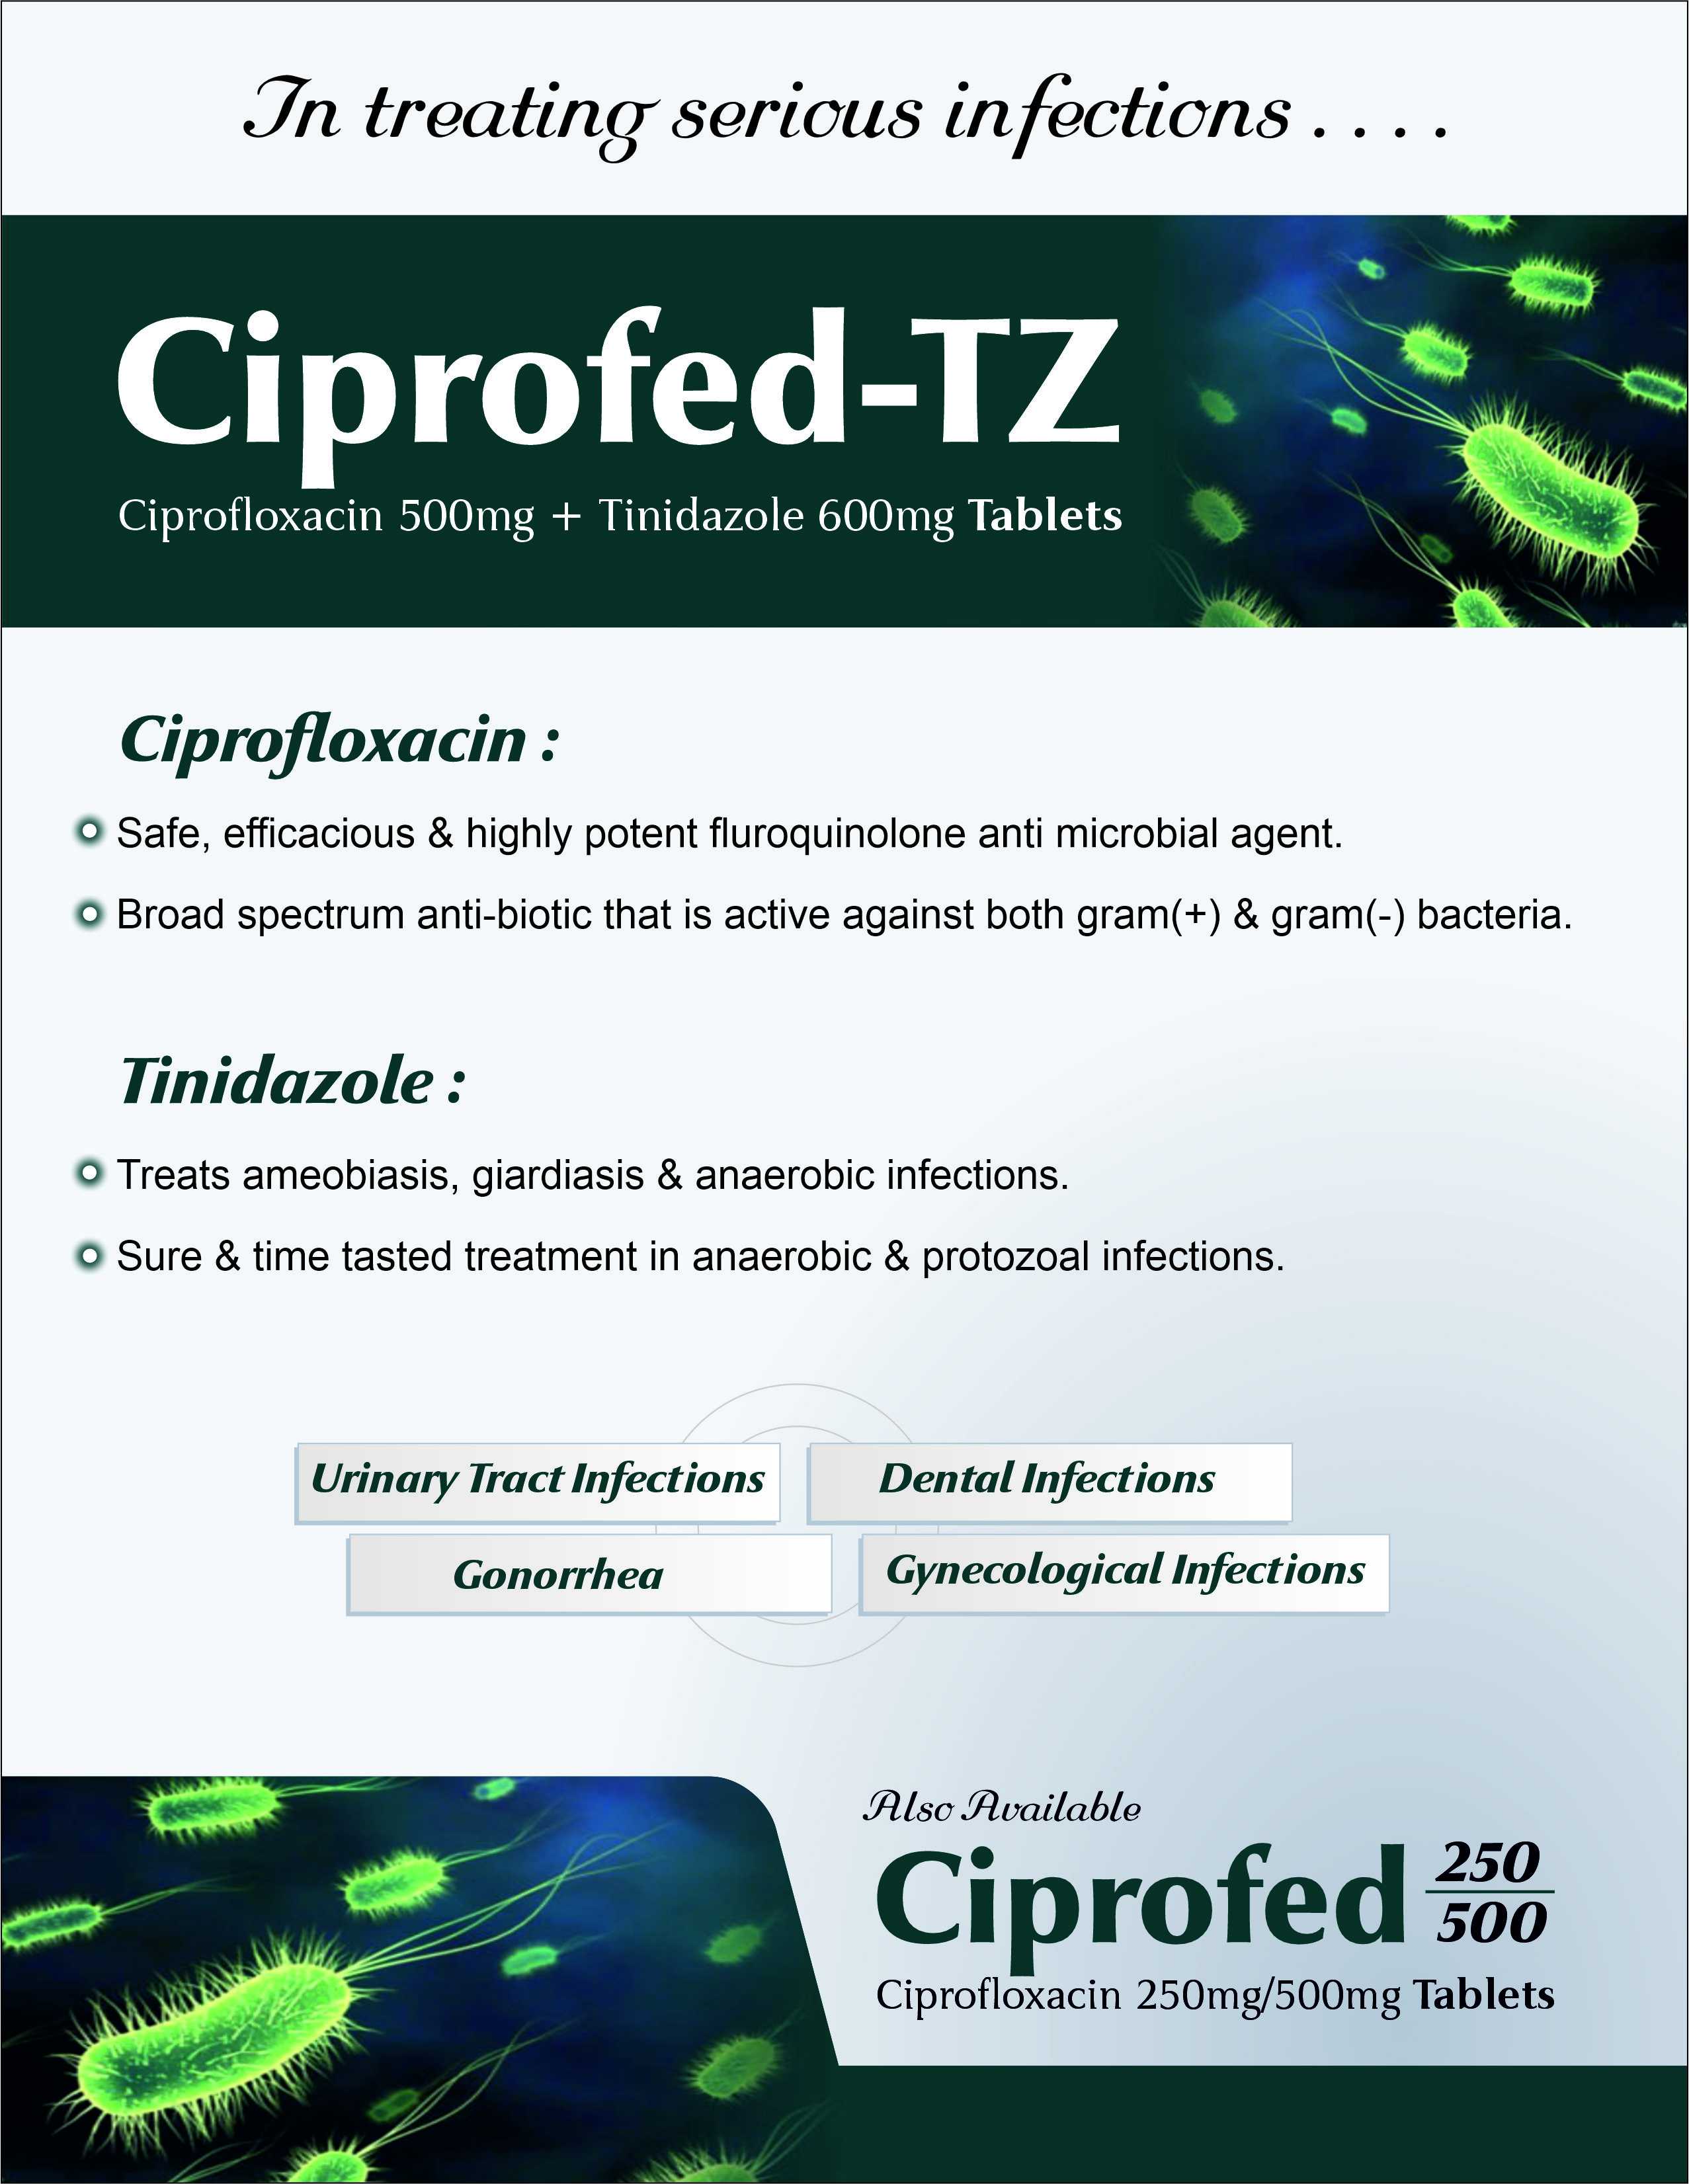 CIPROFED-TZ